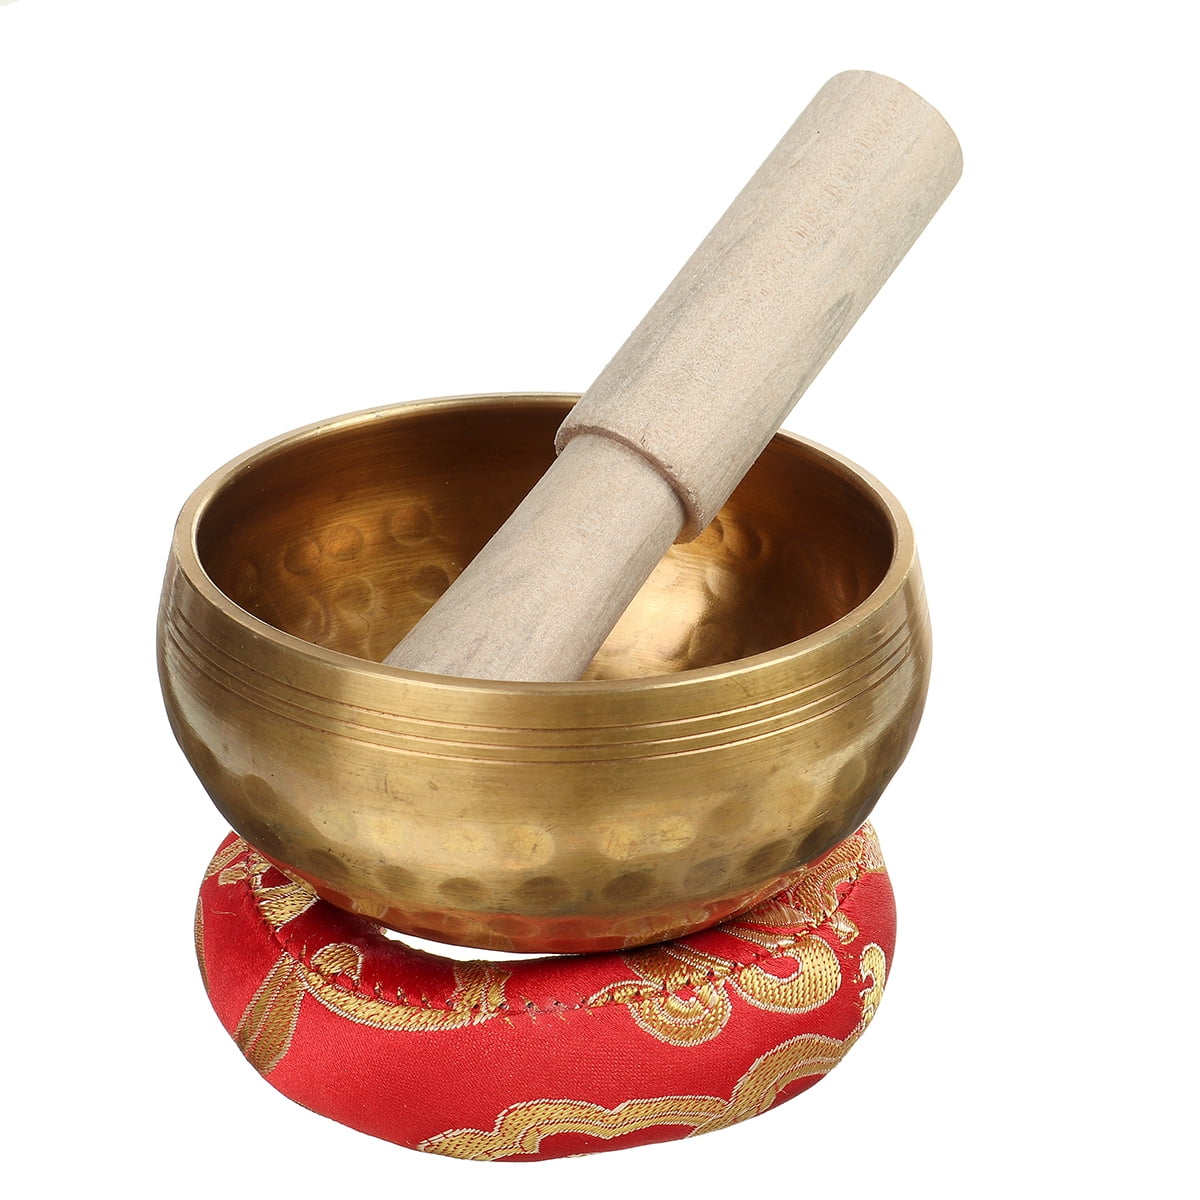 Buddhist Meditation Bowls From Nepal yoga creation Beaten Tibetan Singing Bowl Set of 5 Hand Hammered